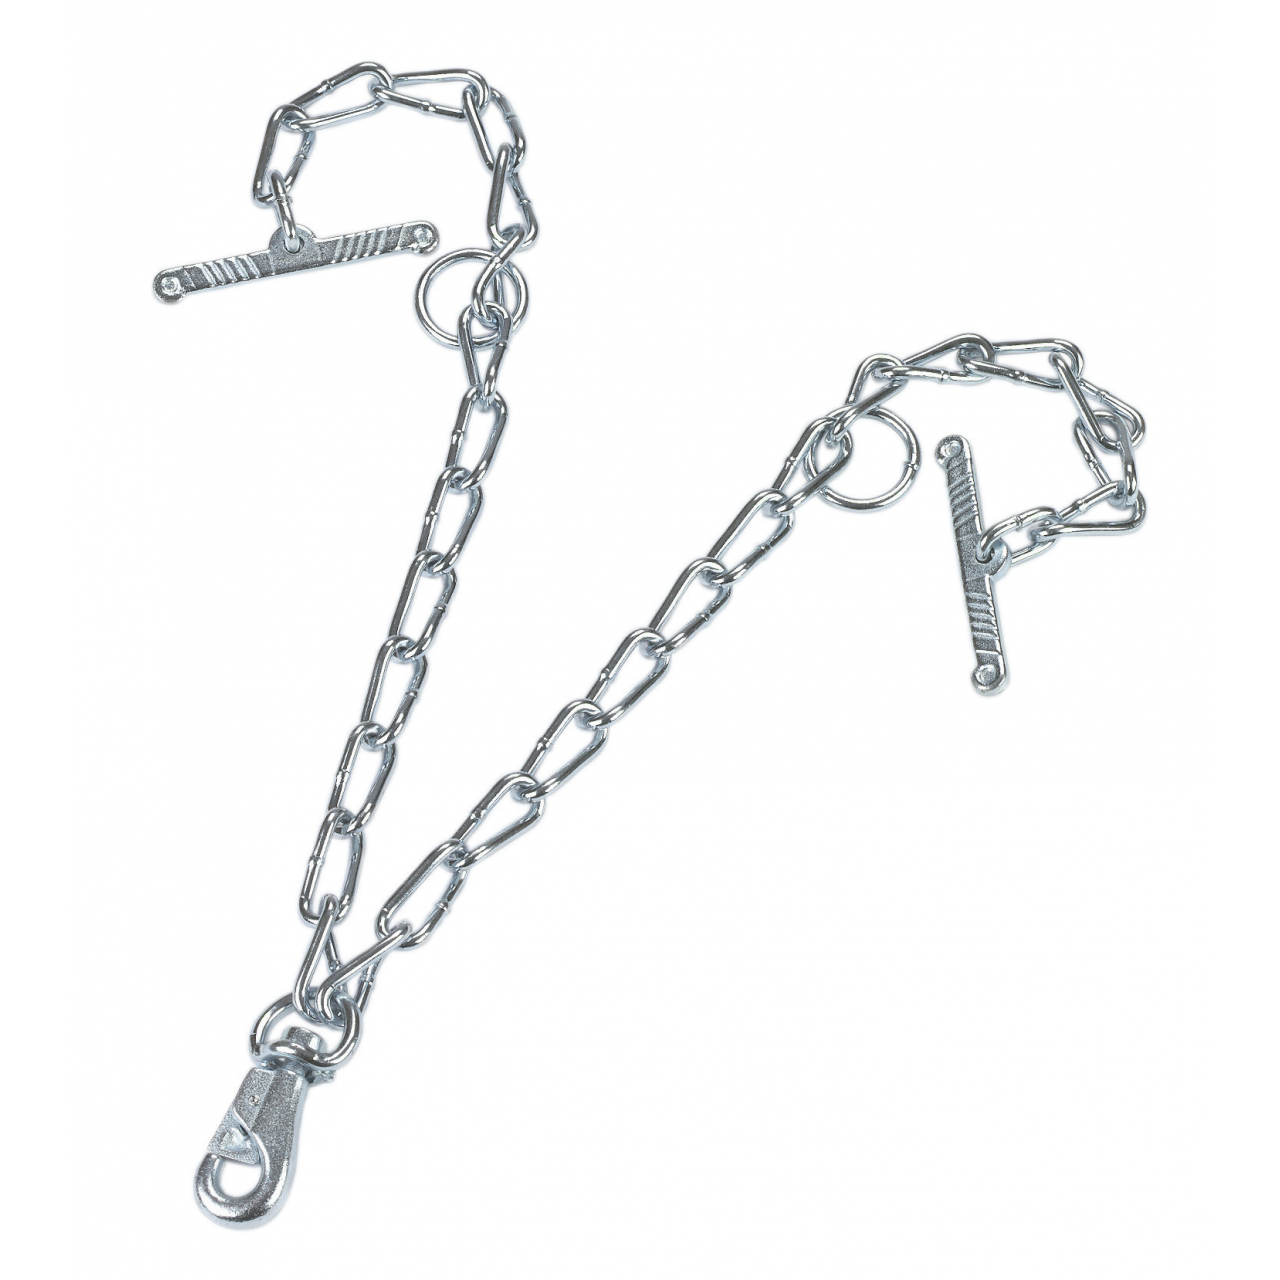 Marhakikötő lánc - kétágú, karabínerrel, 70 cm, 6 mm